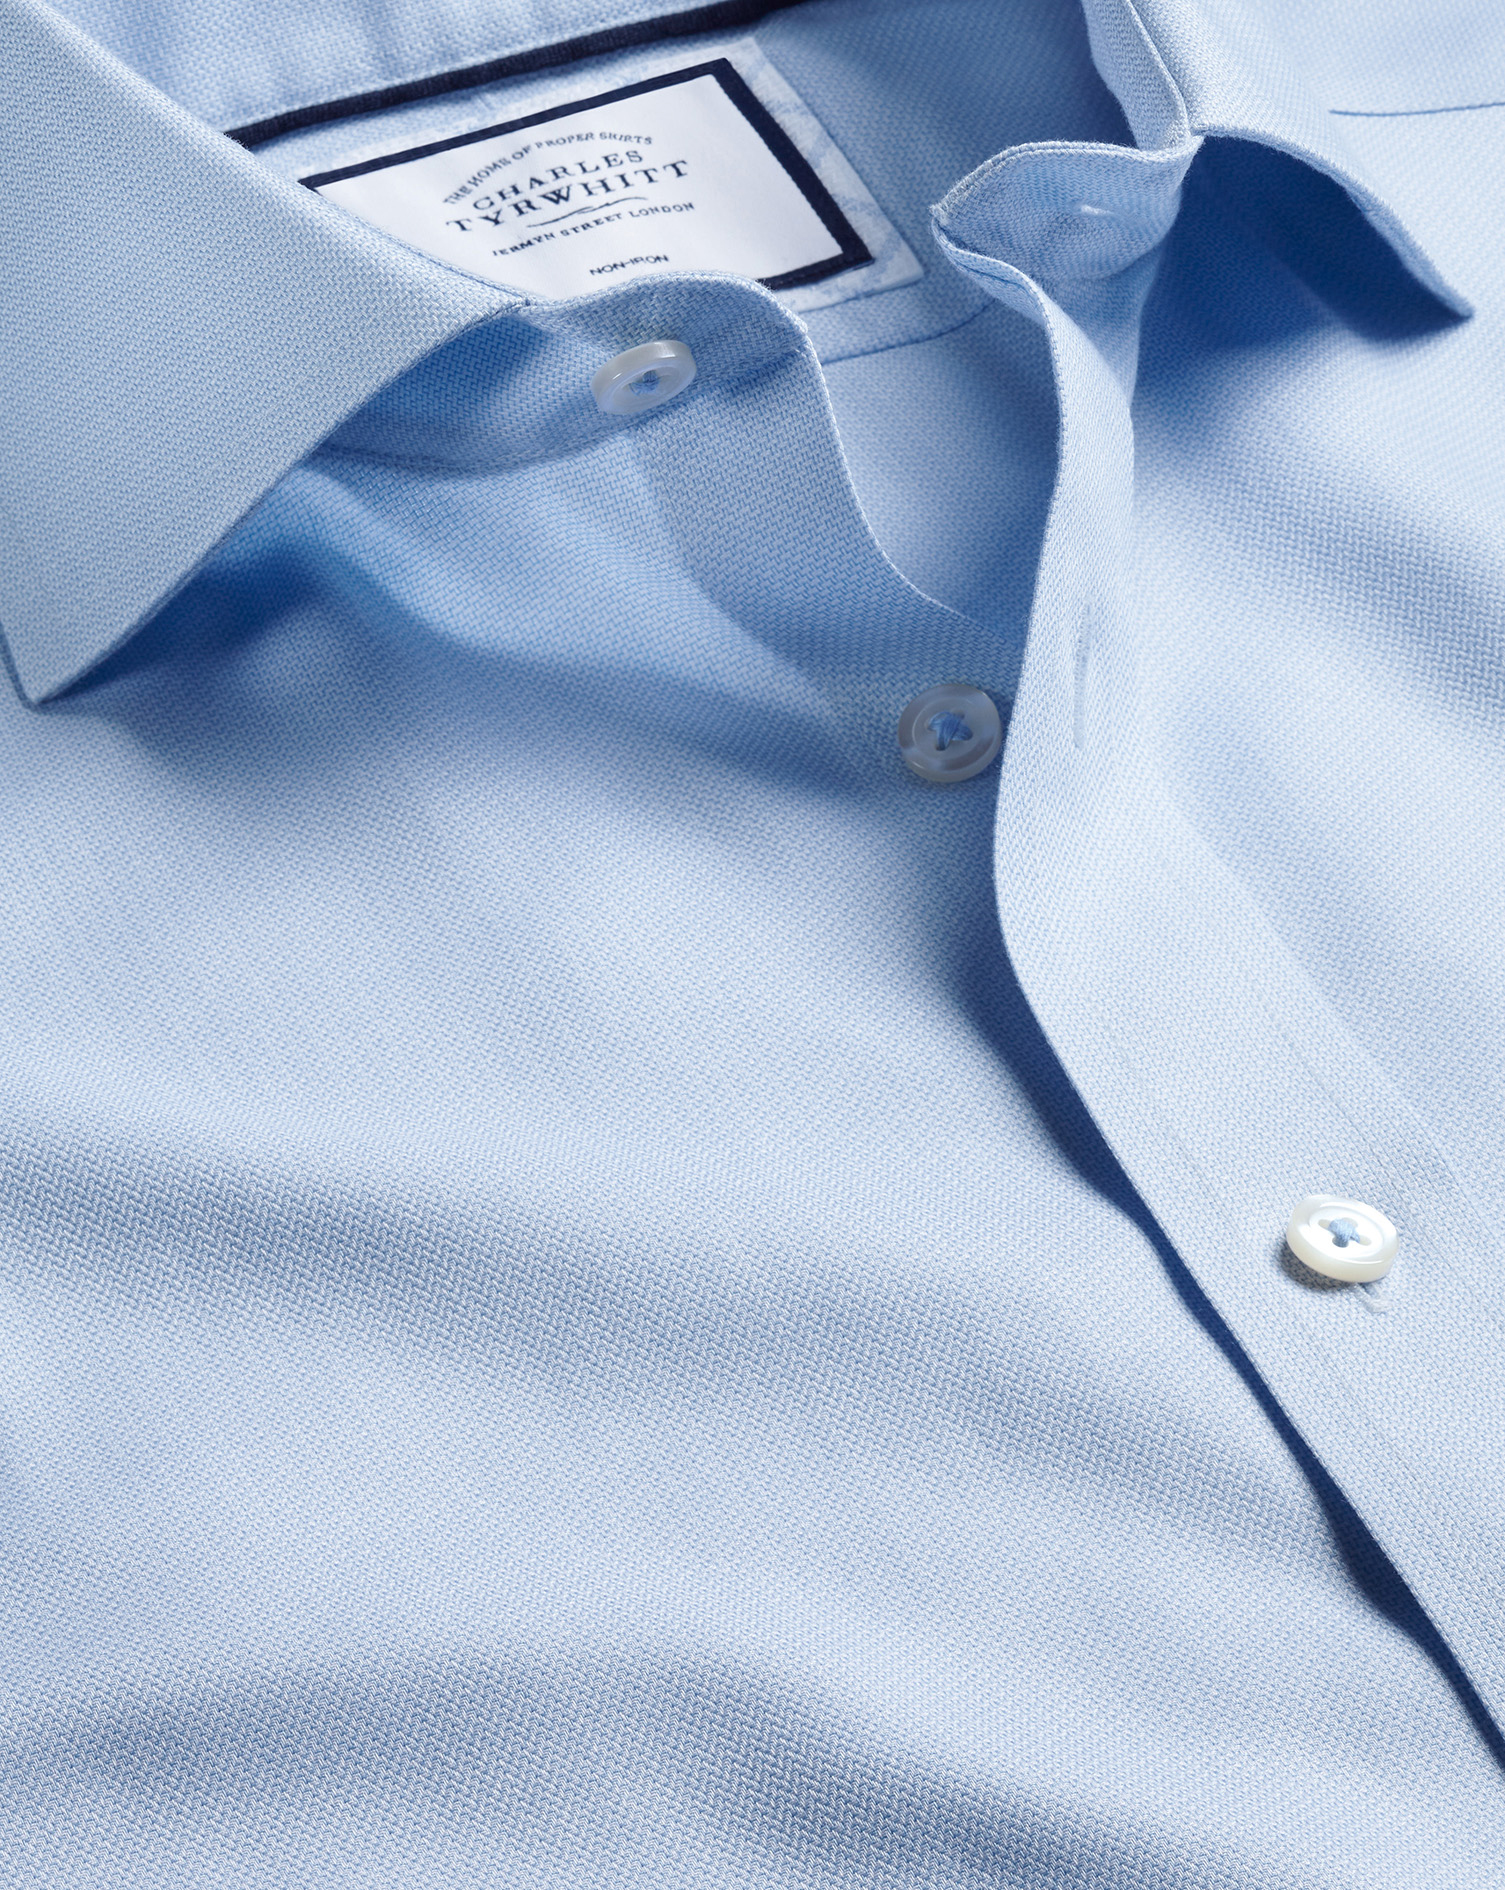 Men's Charles Tyrwhitt Cutaway Collar Non-Iron Henley Weave Dress Shirt - Sky Blue French Cuff Size 